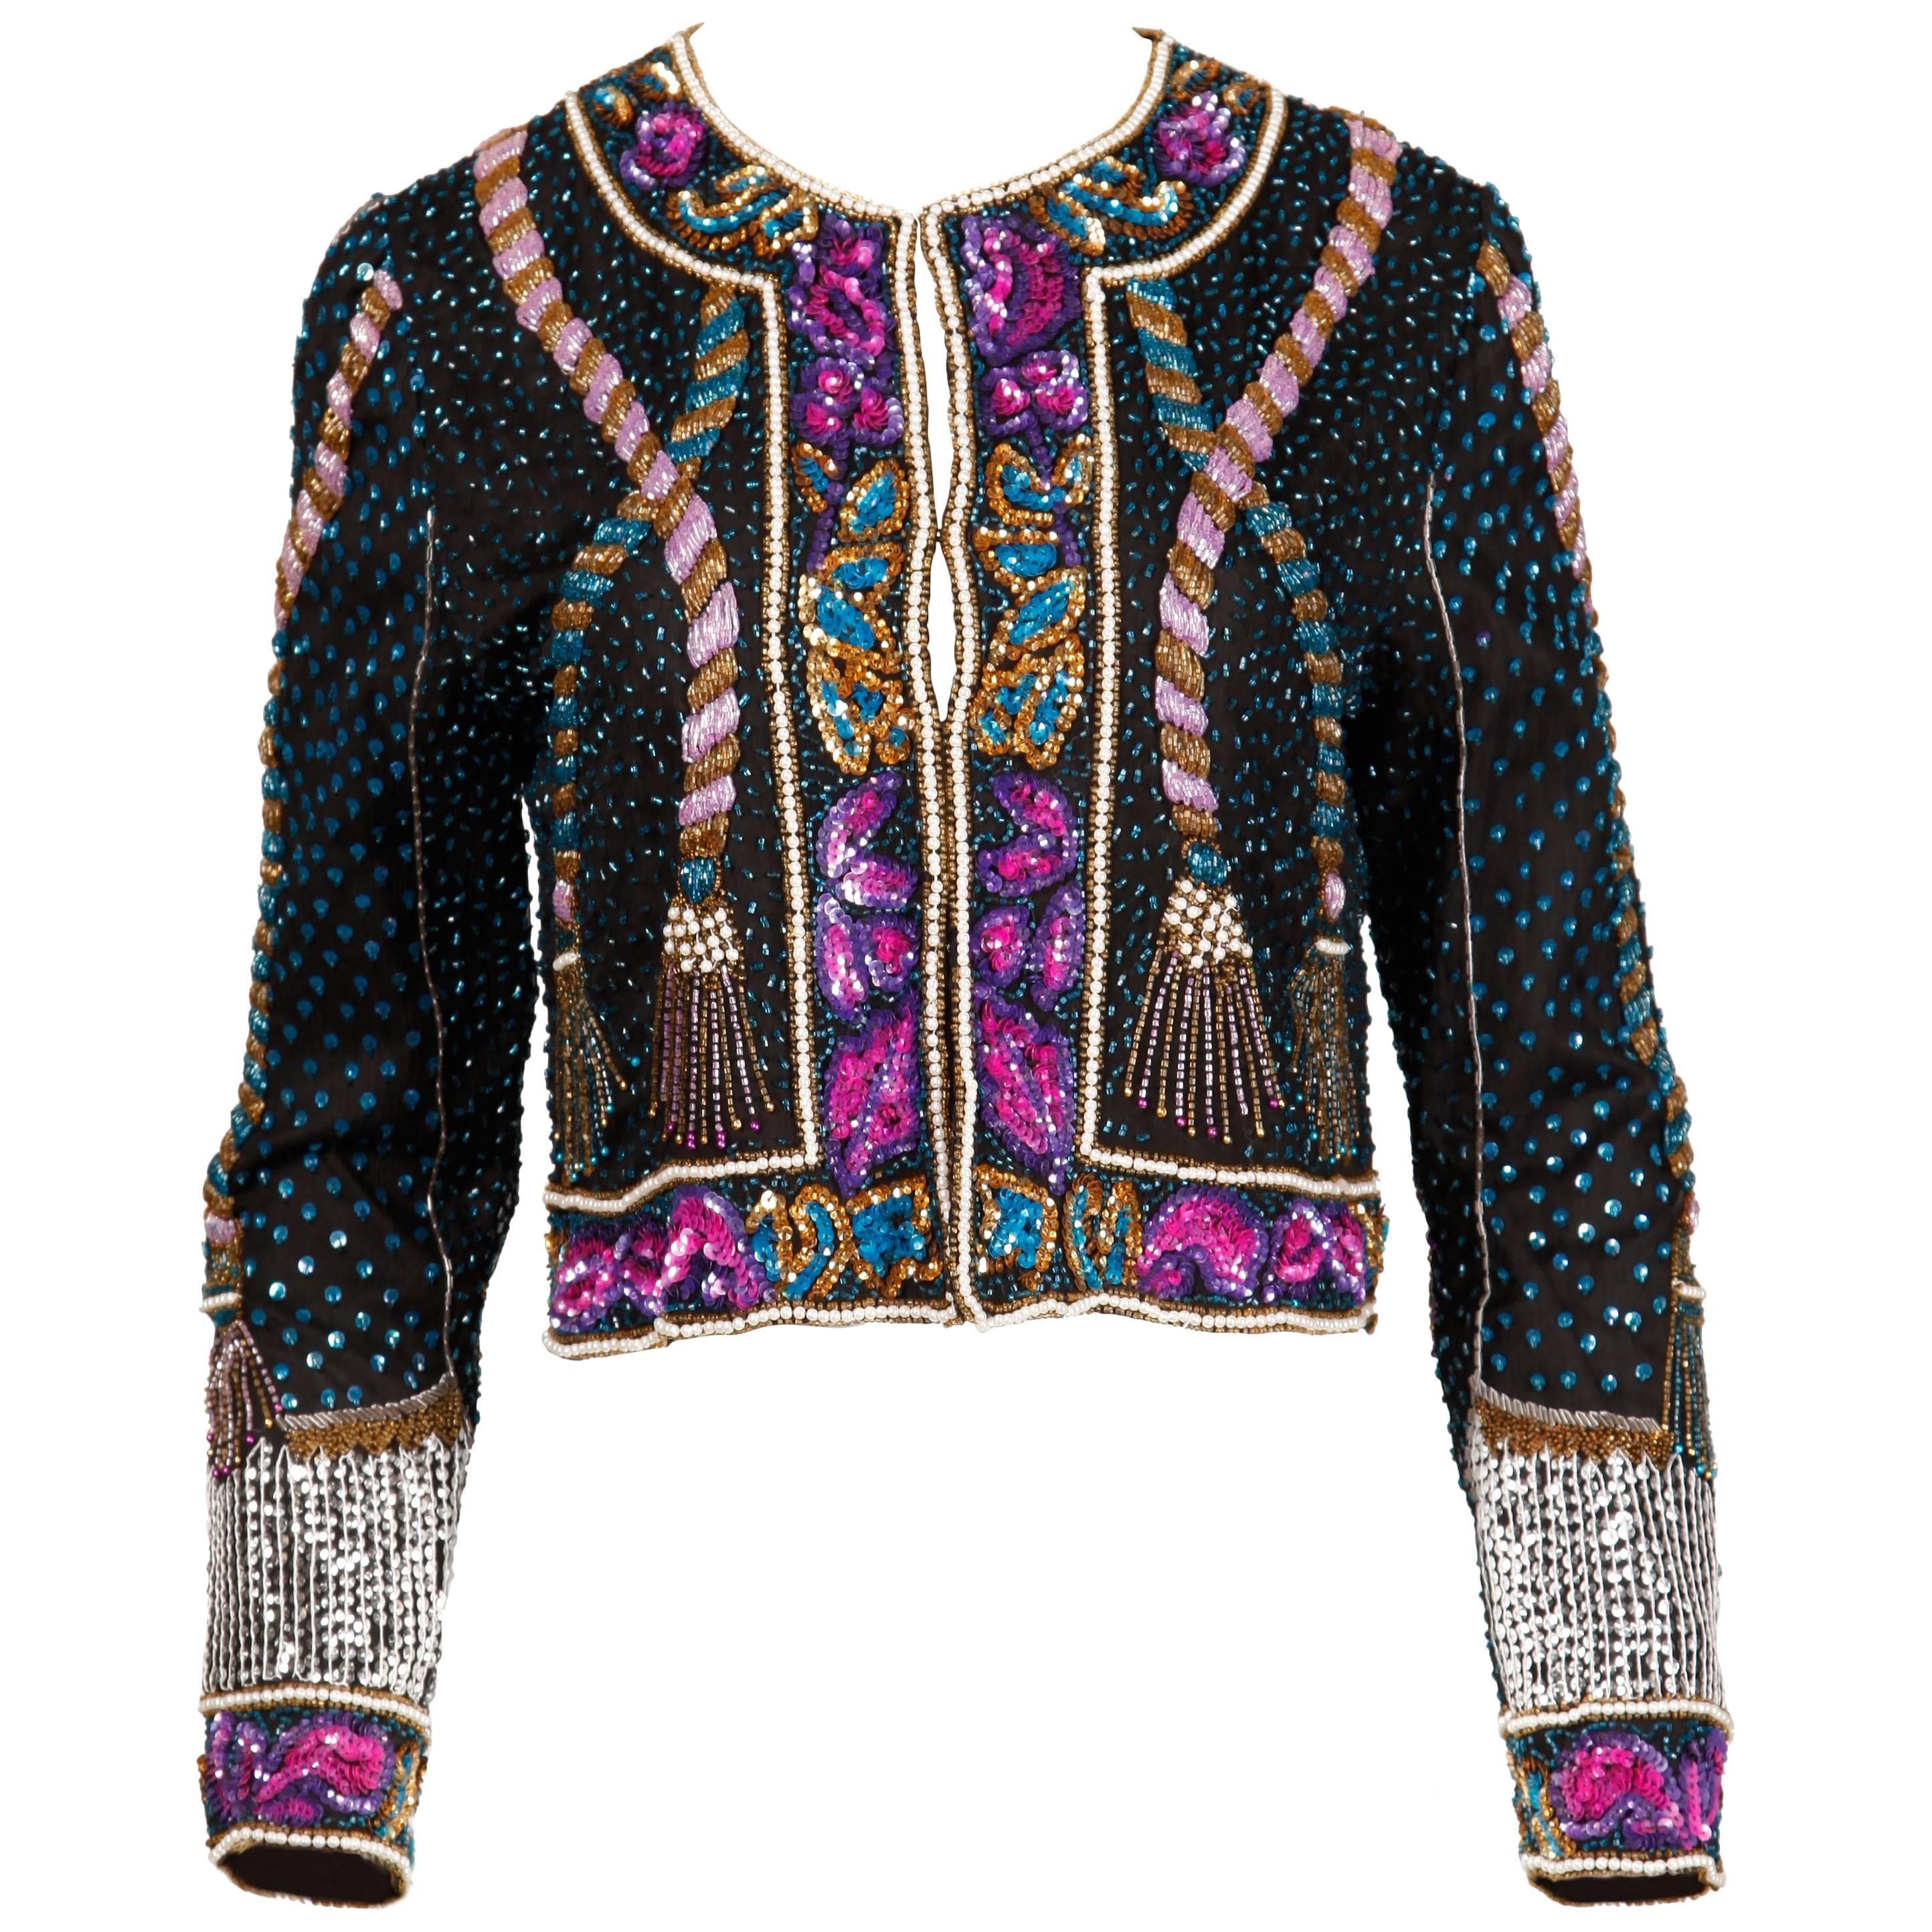 Unworn with Tags Vintage Beaded + Sequin Silk Trophy Jacket with Tassel Design